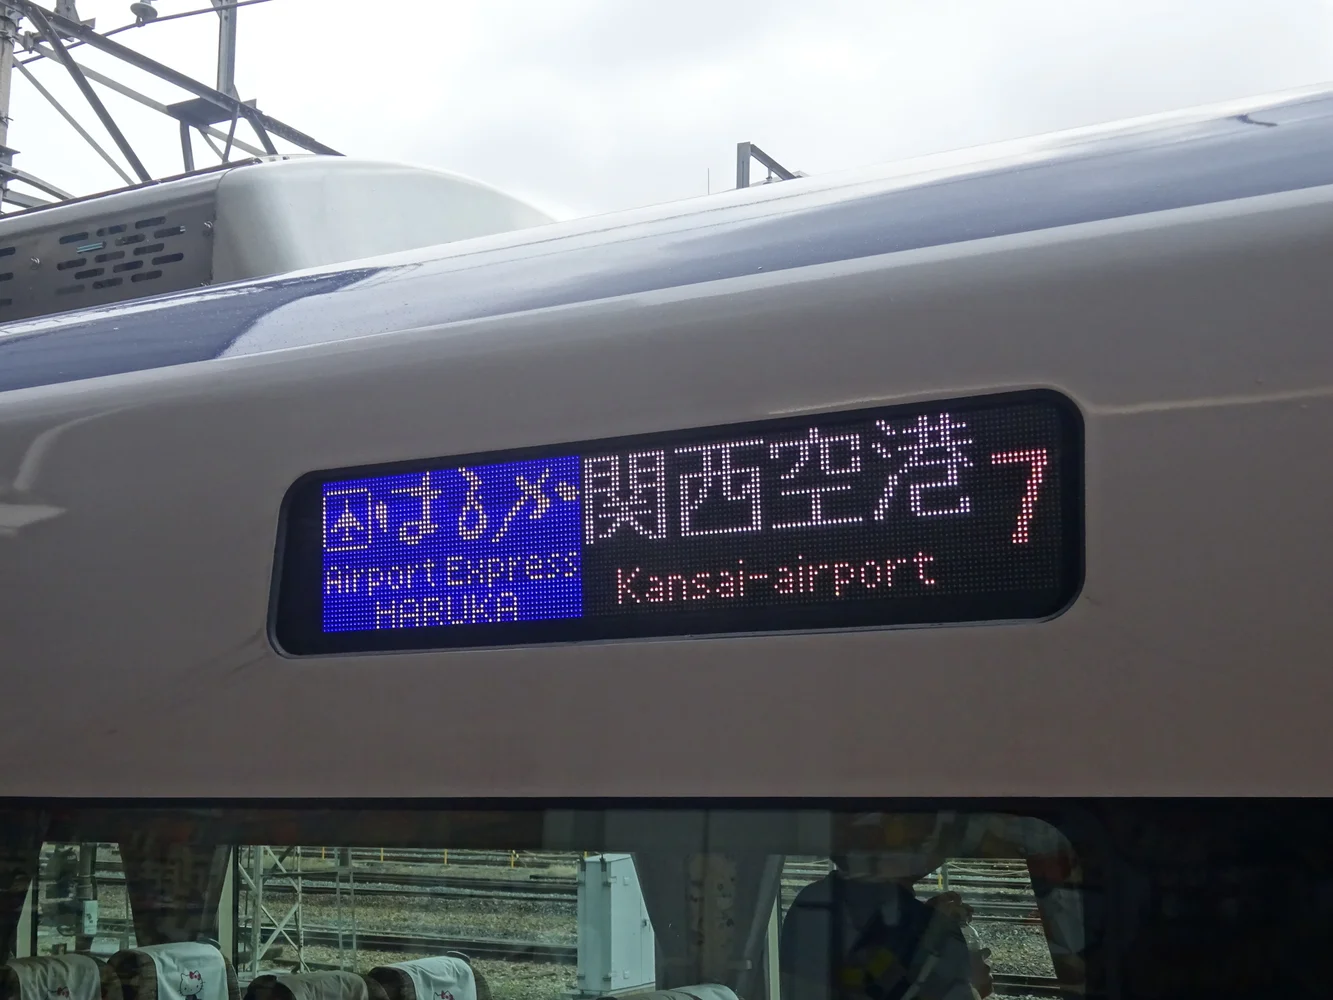 Kansai Airport–Shin-Osaka/Tennoji Haruka Limited Express One-Way Tickets [For Tourists] 